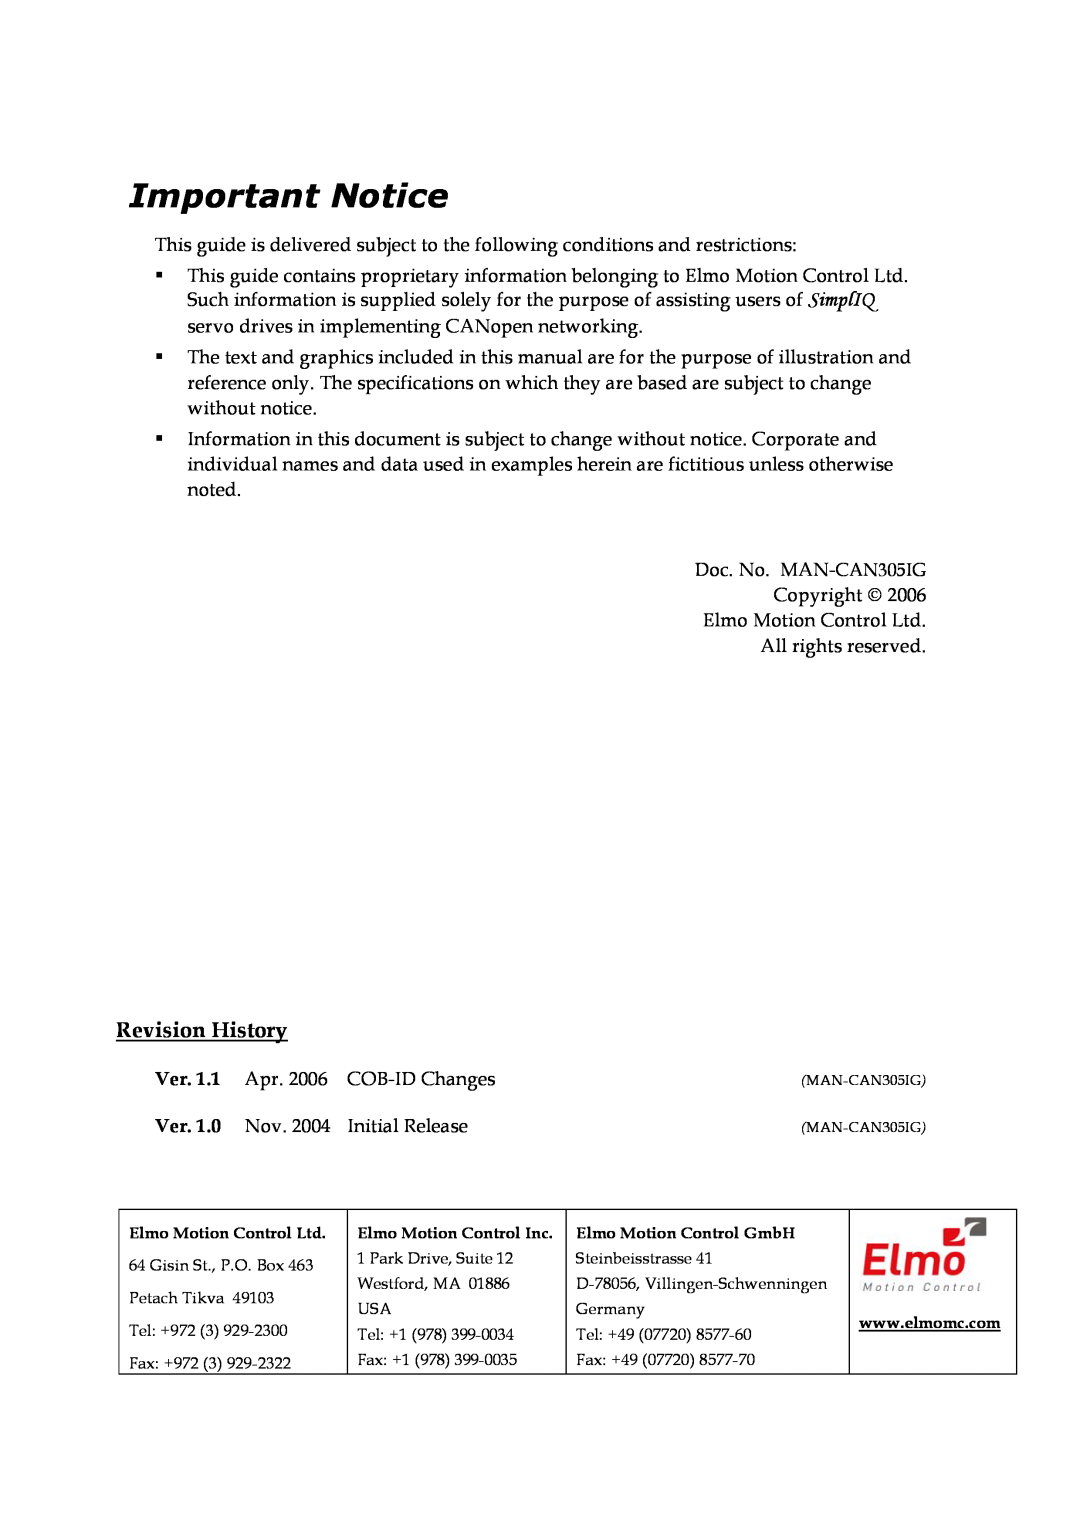 Elmo DSP 305 manual Important Notice, Ver, Revision History 